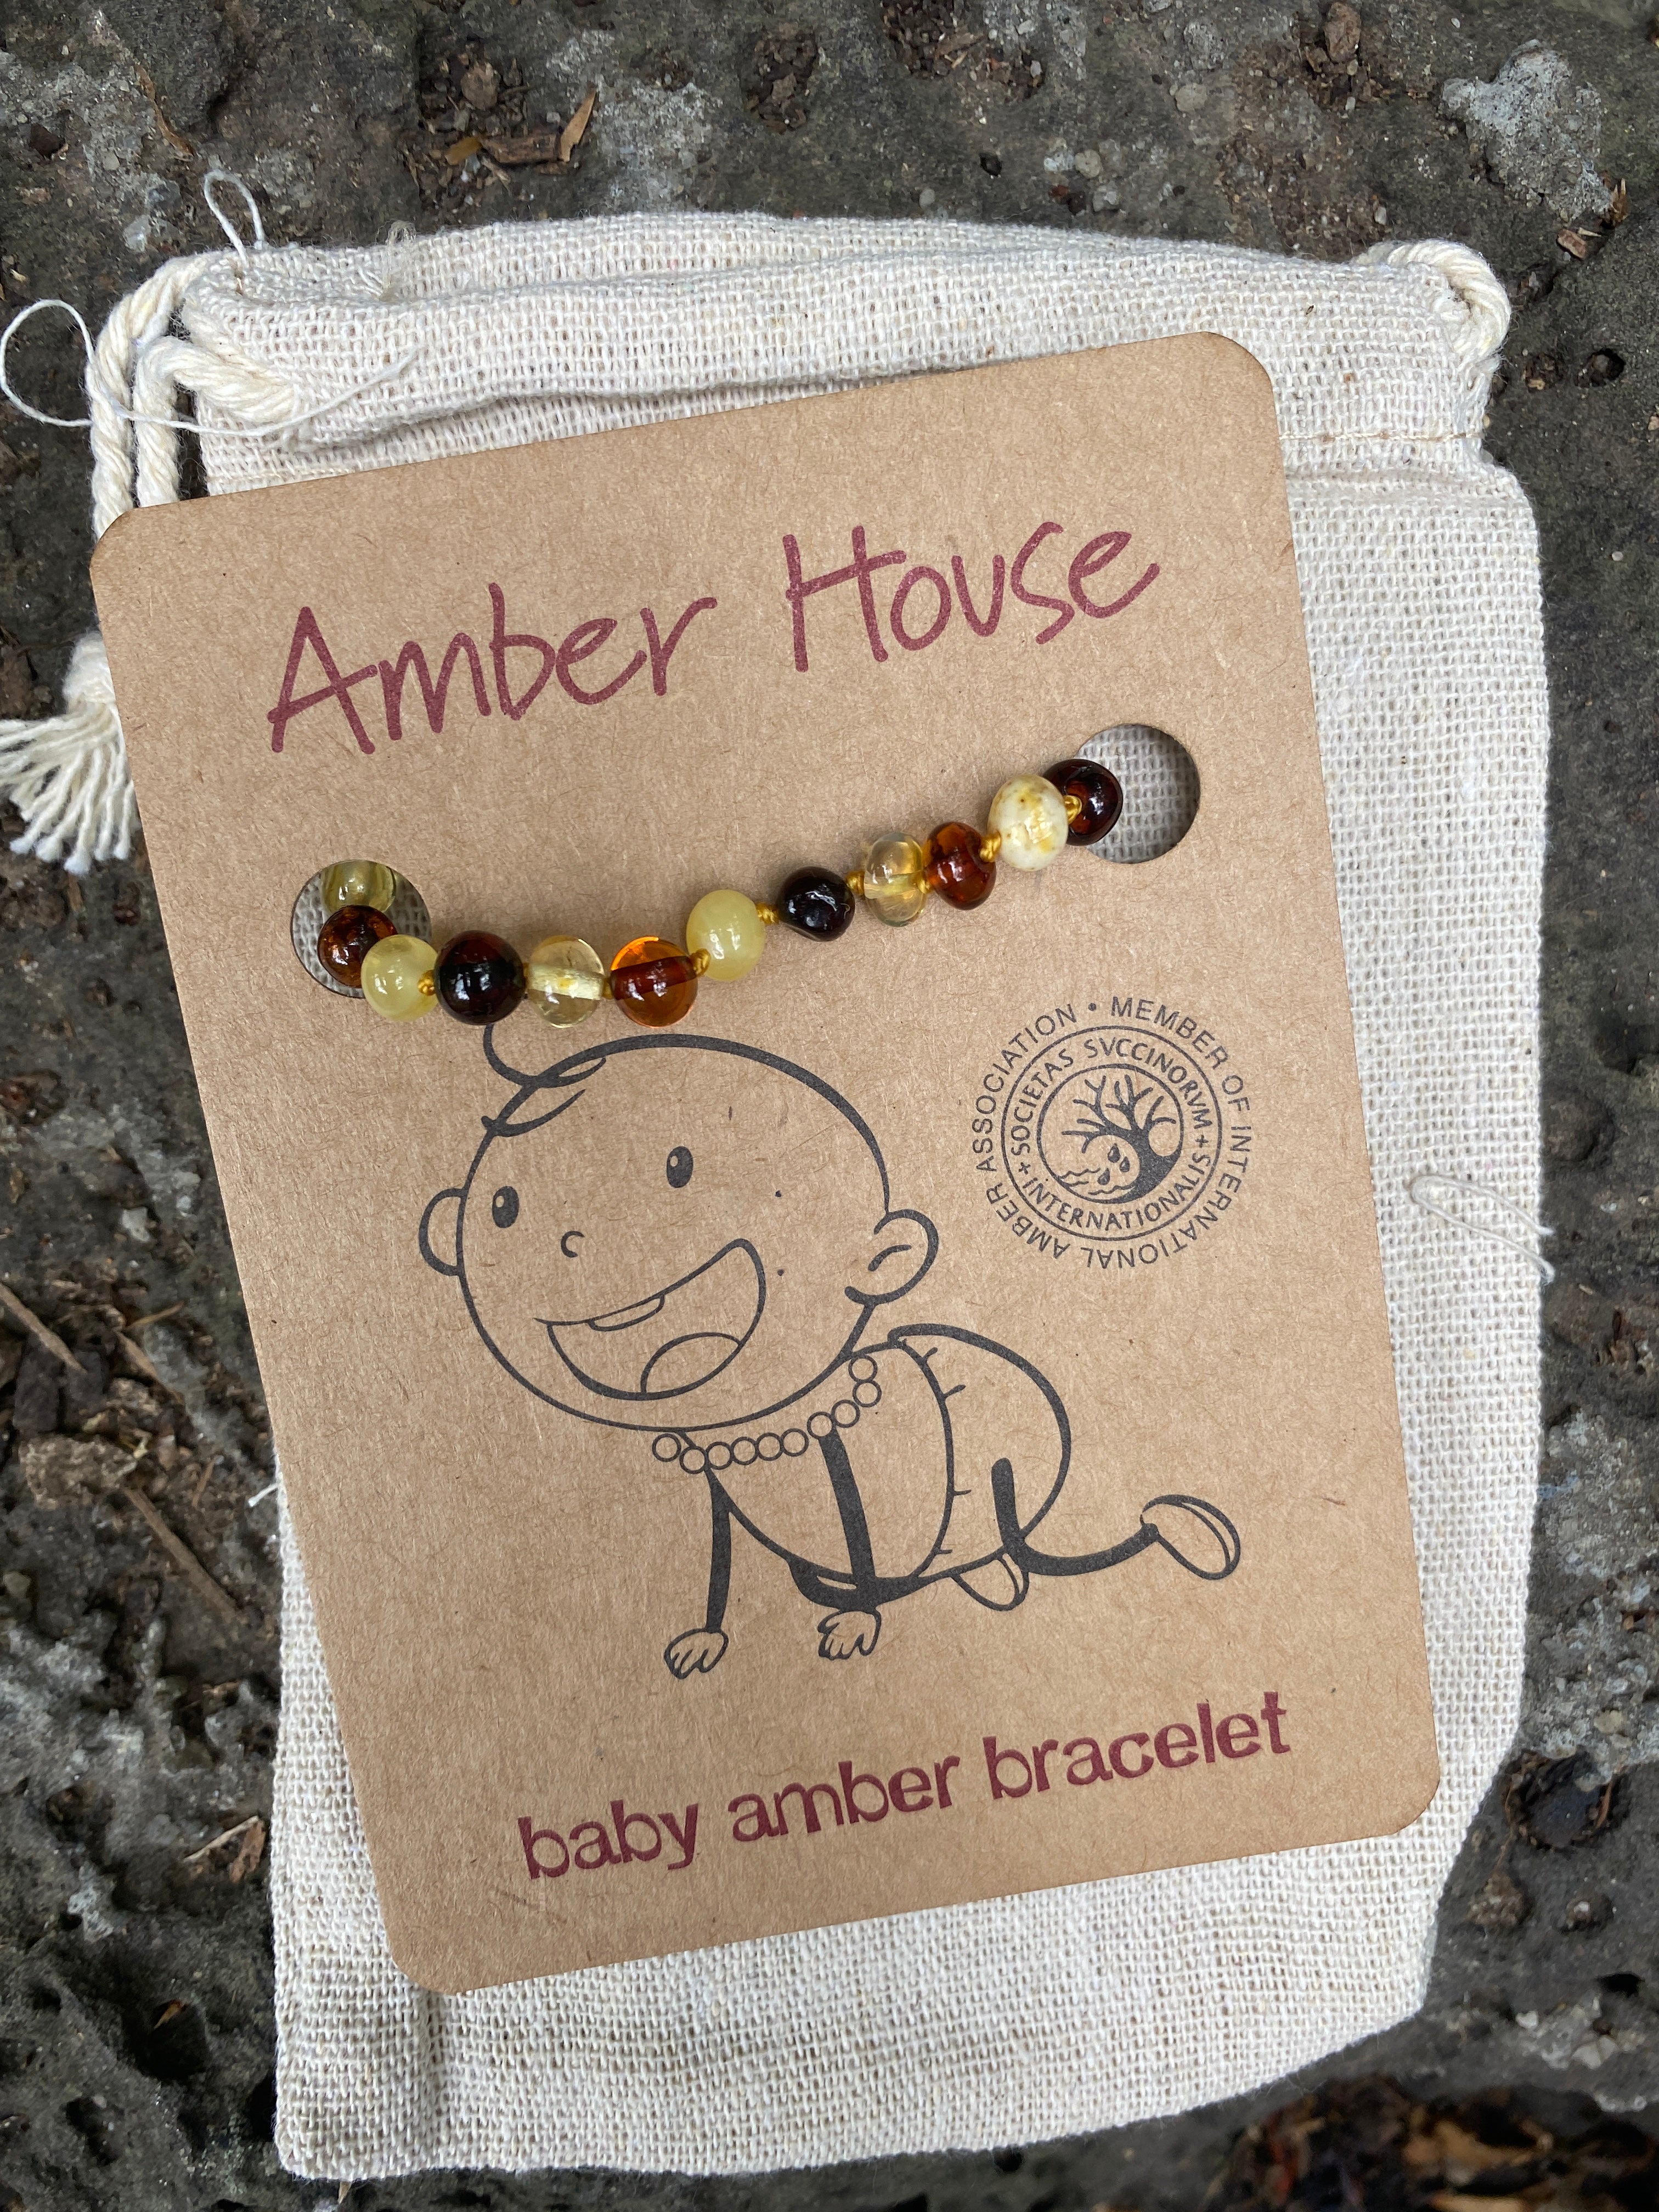 Multi Baroque Baltic Amber bracelet / anklet - Amber House 